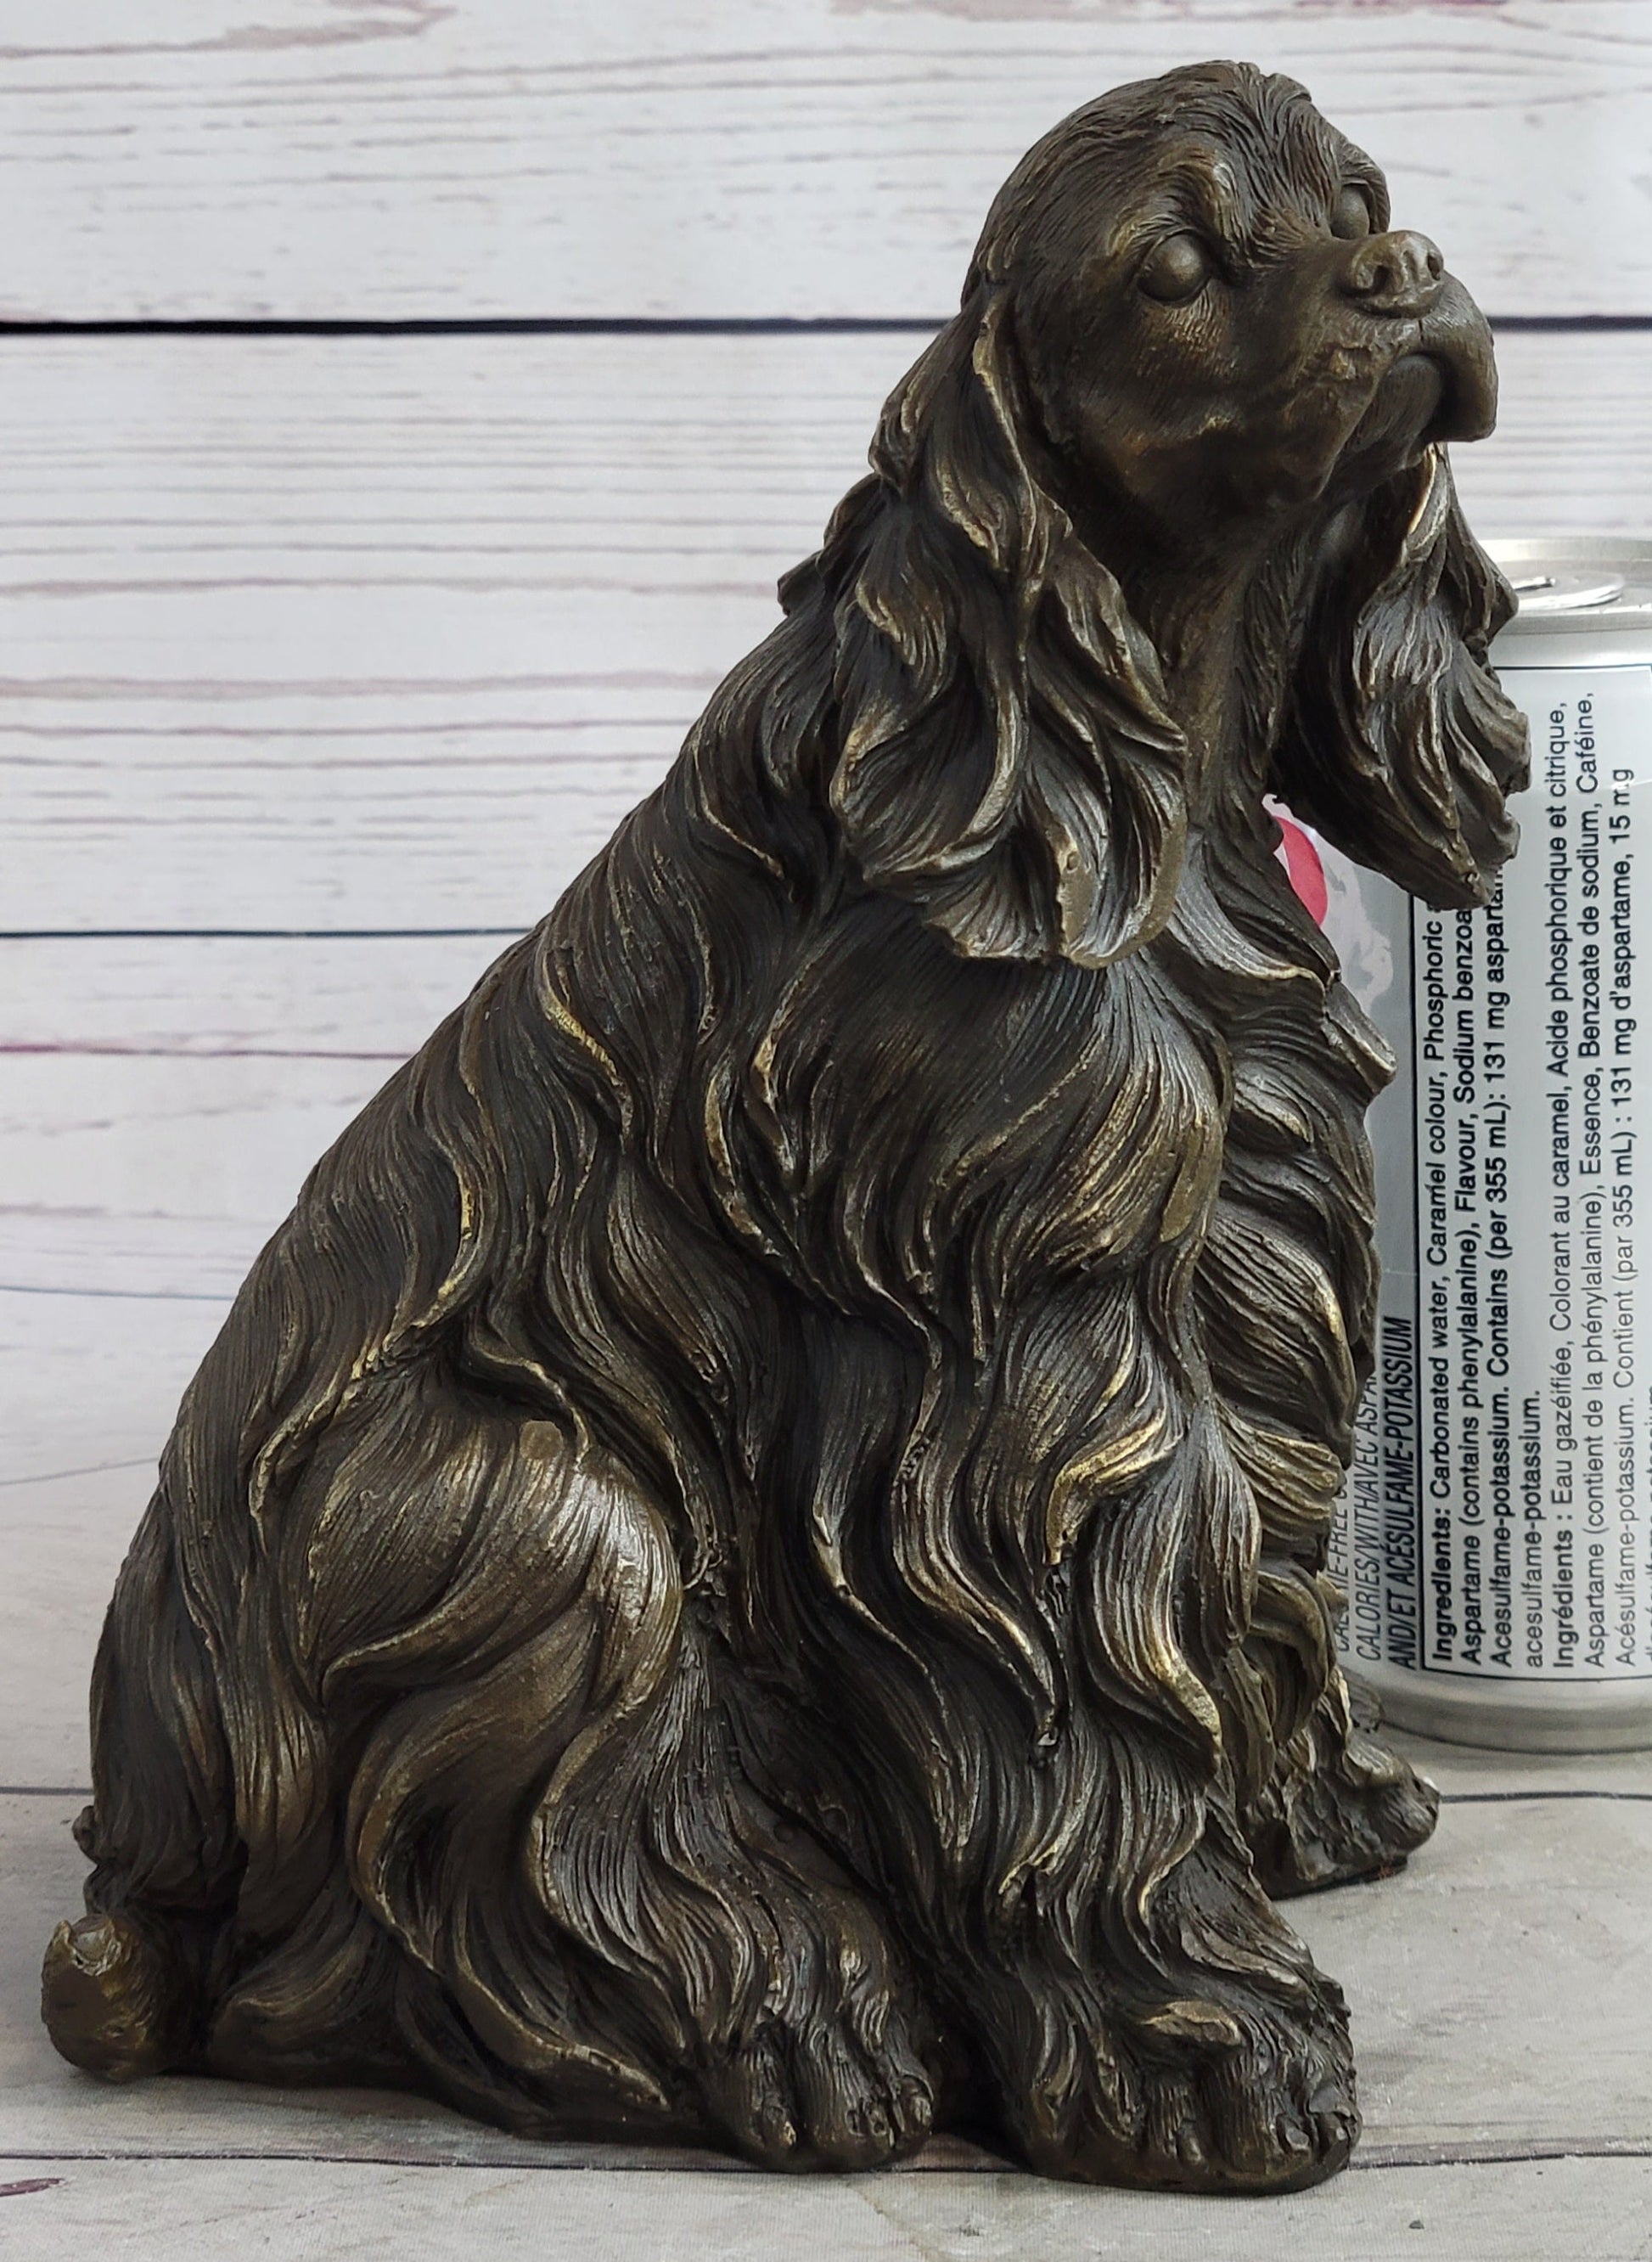 Bronze Metal Figurine Sculpture Statue of a Dog Cocker Spaniel or King Charles Cavalier